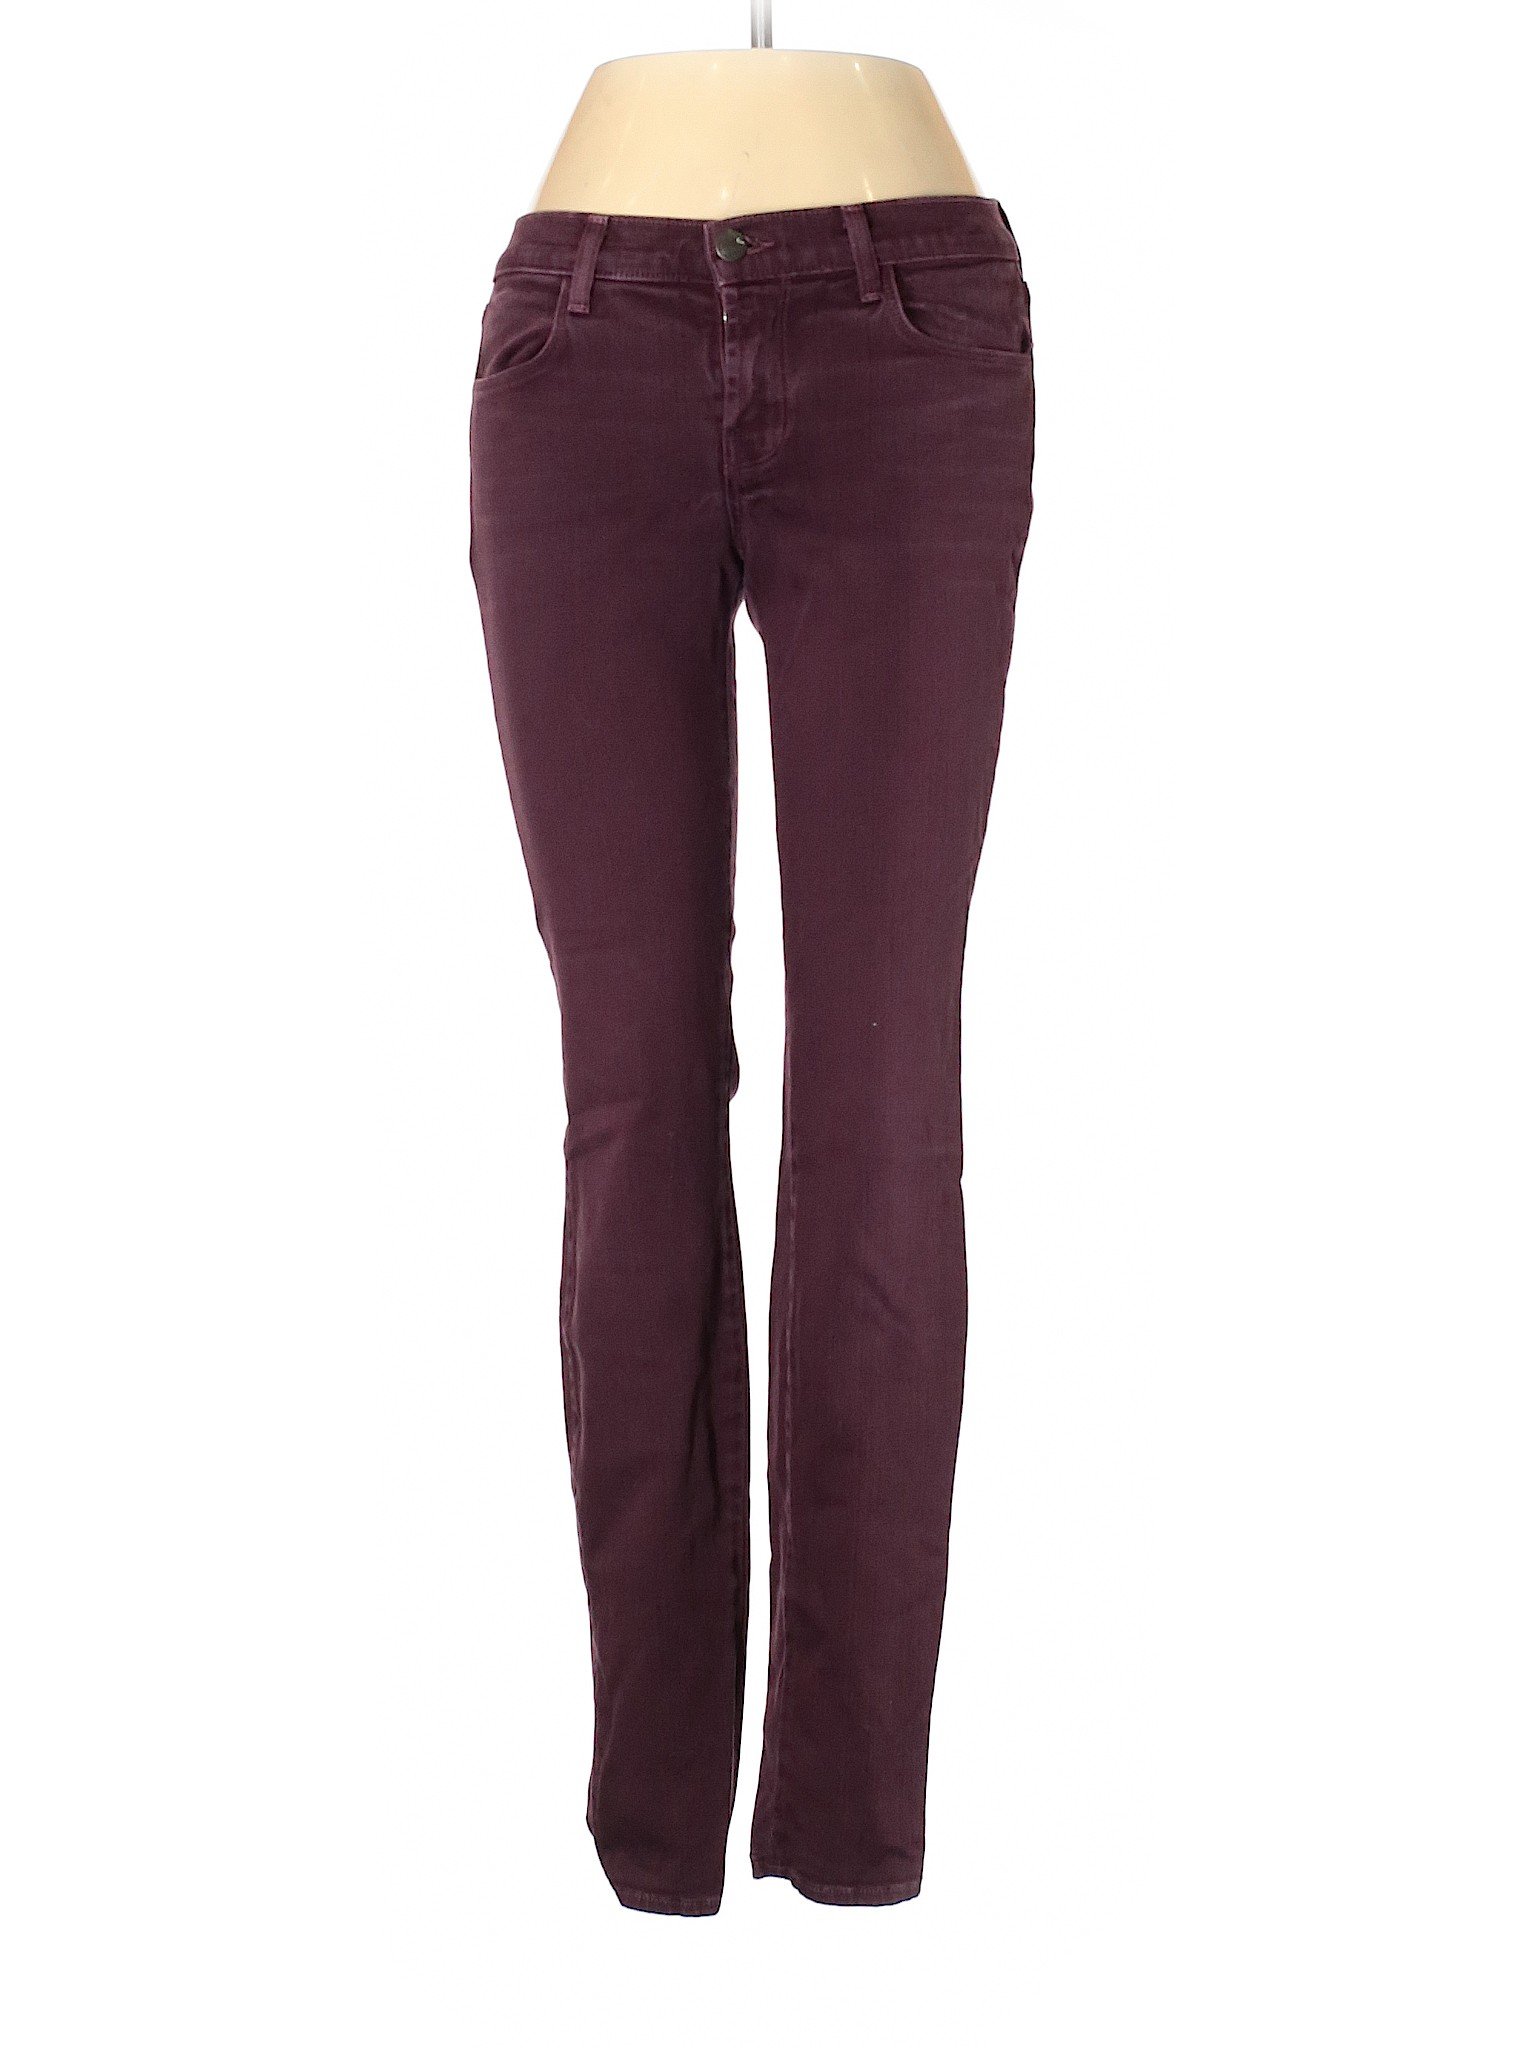 Purple brand jeans - lynapoX